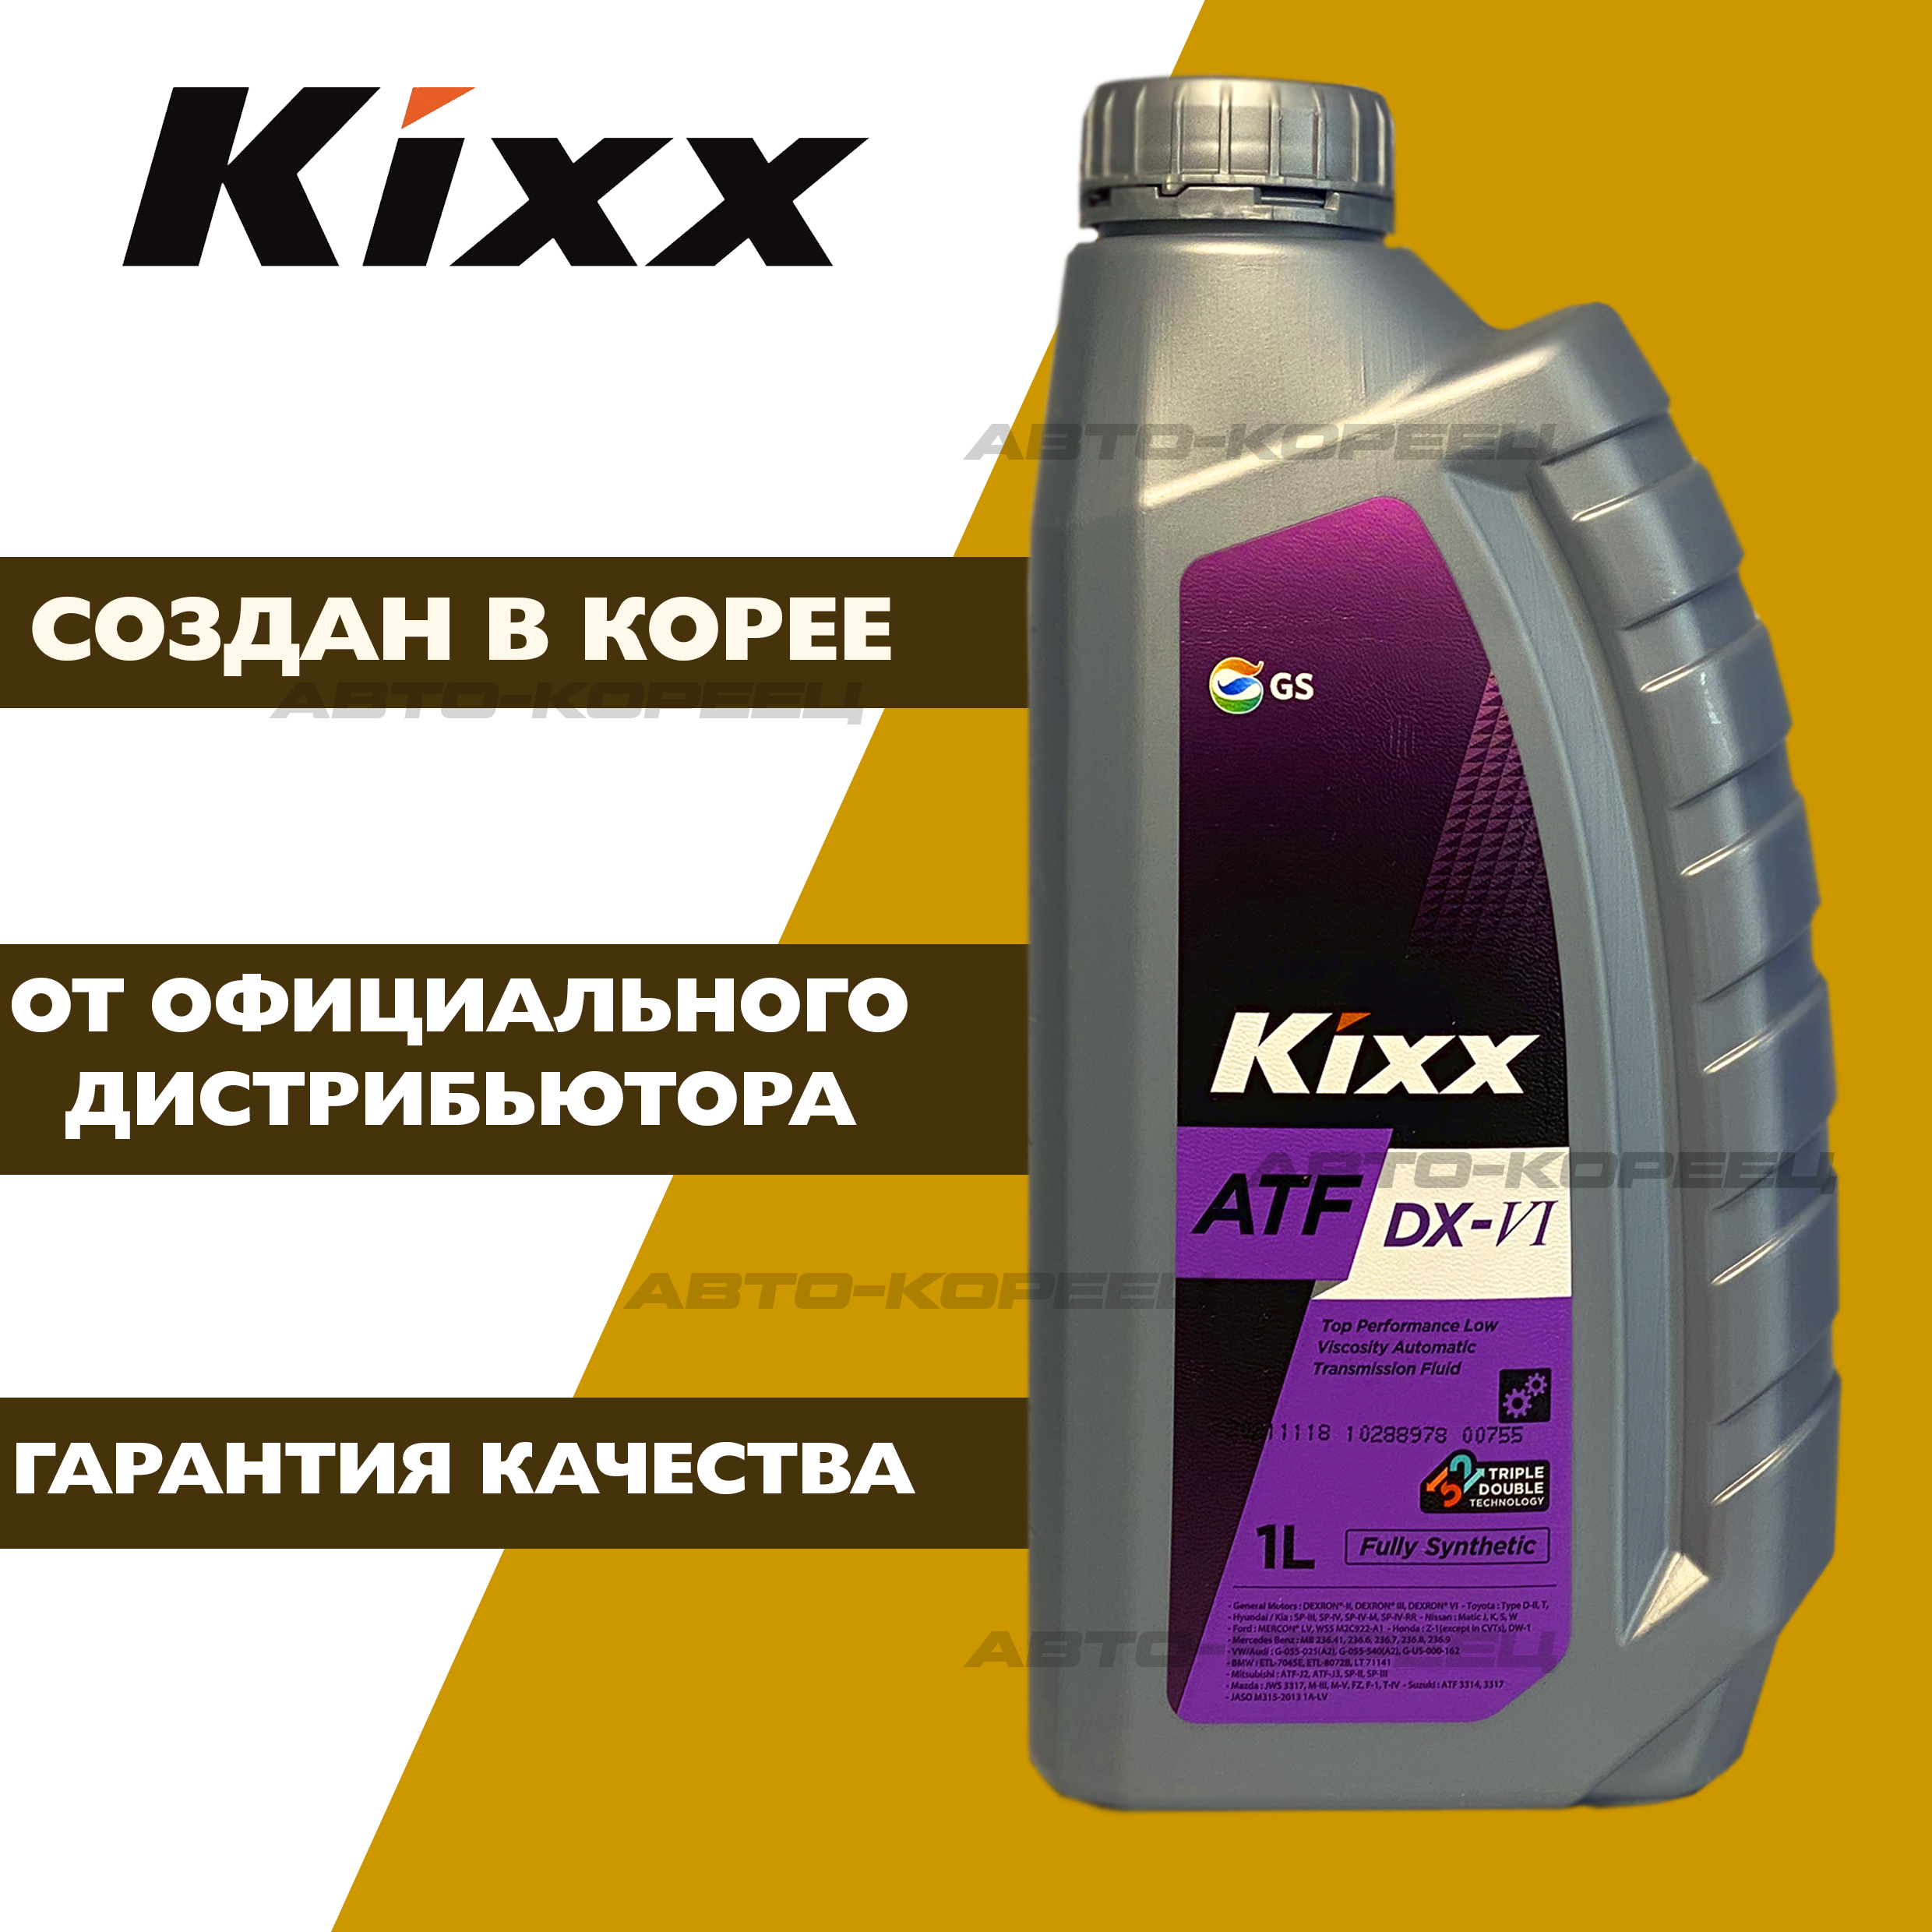 Kixx ATF DX-vi. L2524al1e1 Kixx. Kixx ATF DX|||. Трансмиссионная жидкость Kixx ATF DX-vi /4л синт.. Kixx atf vi